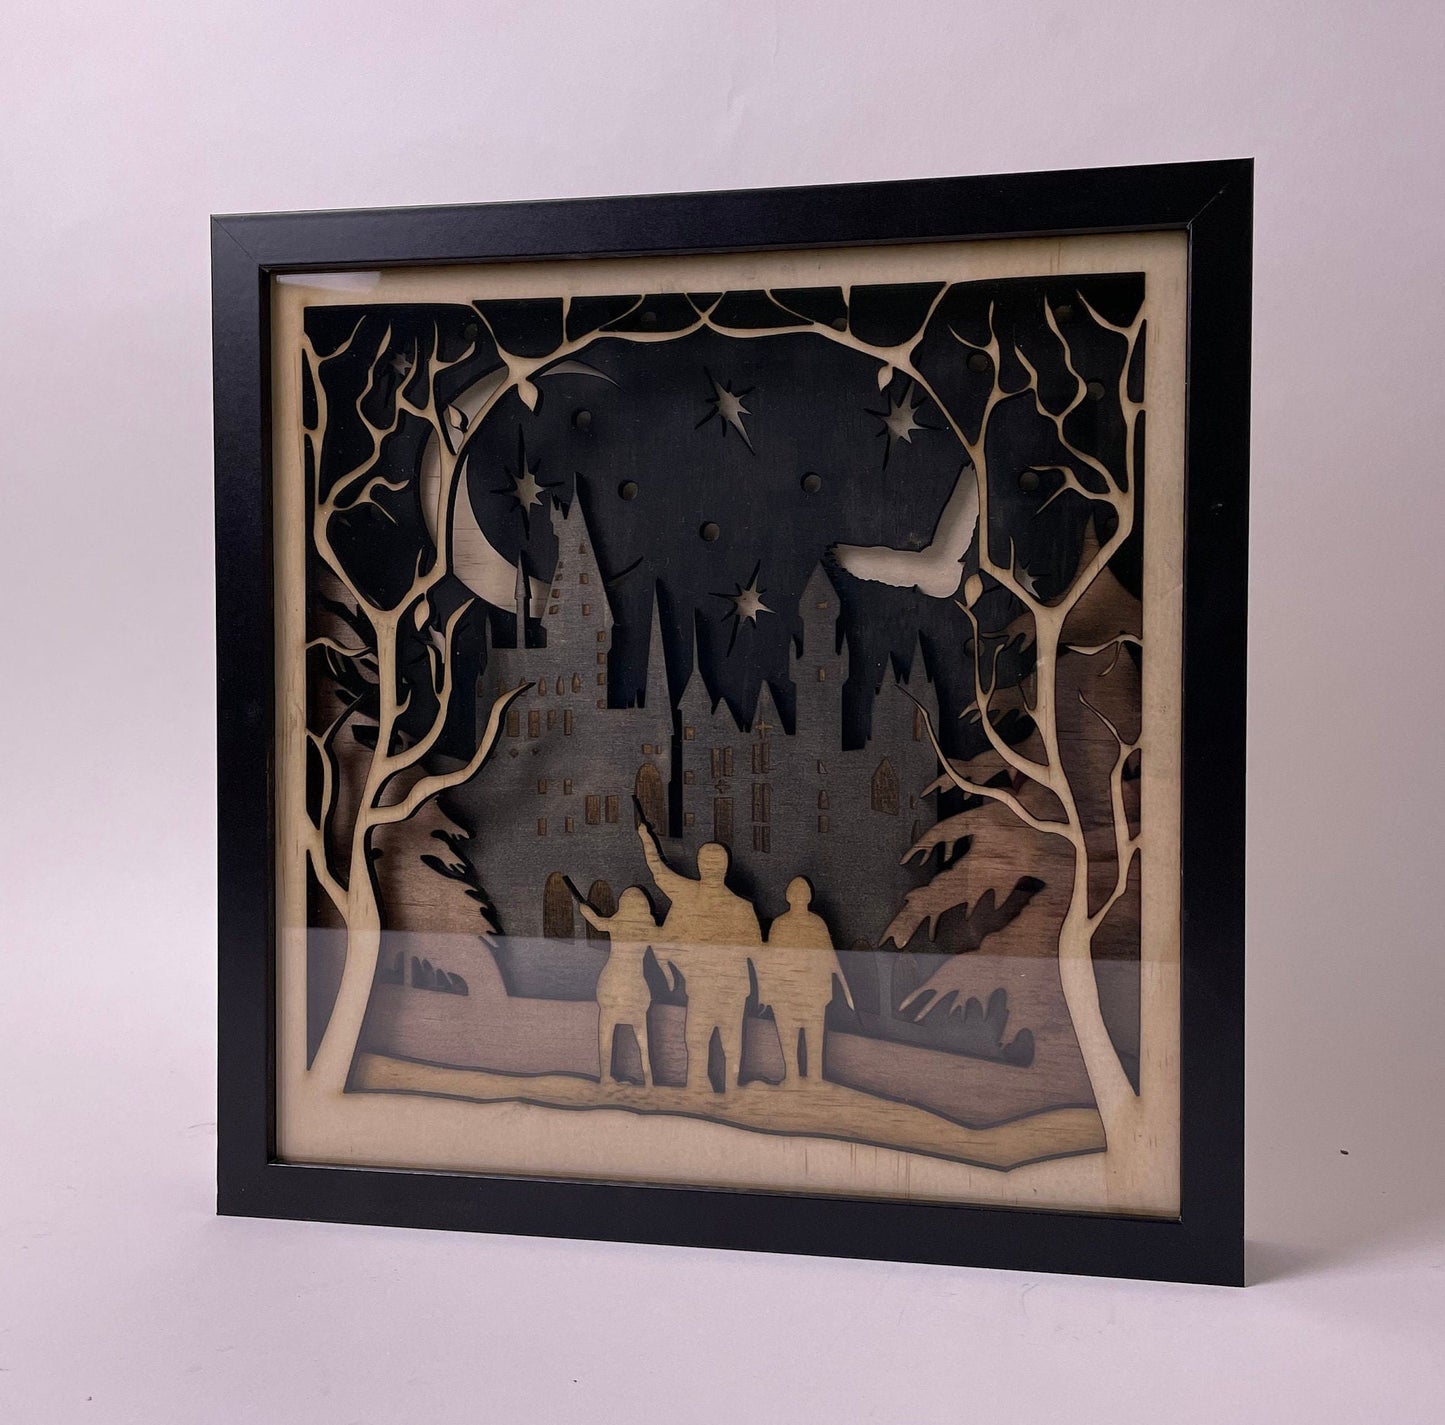 Harry Potter Shadow Box, Framed Wooden Art, Framed Harry Potter Wall Decor, Hand Made in America